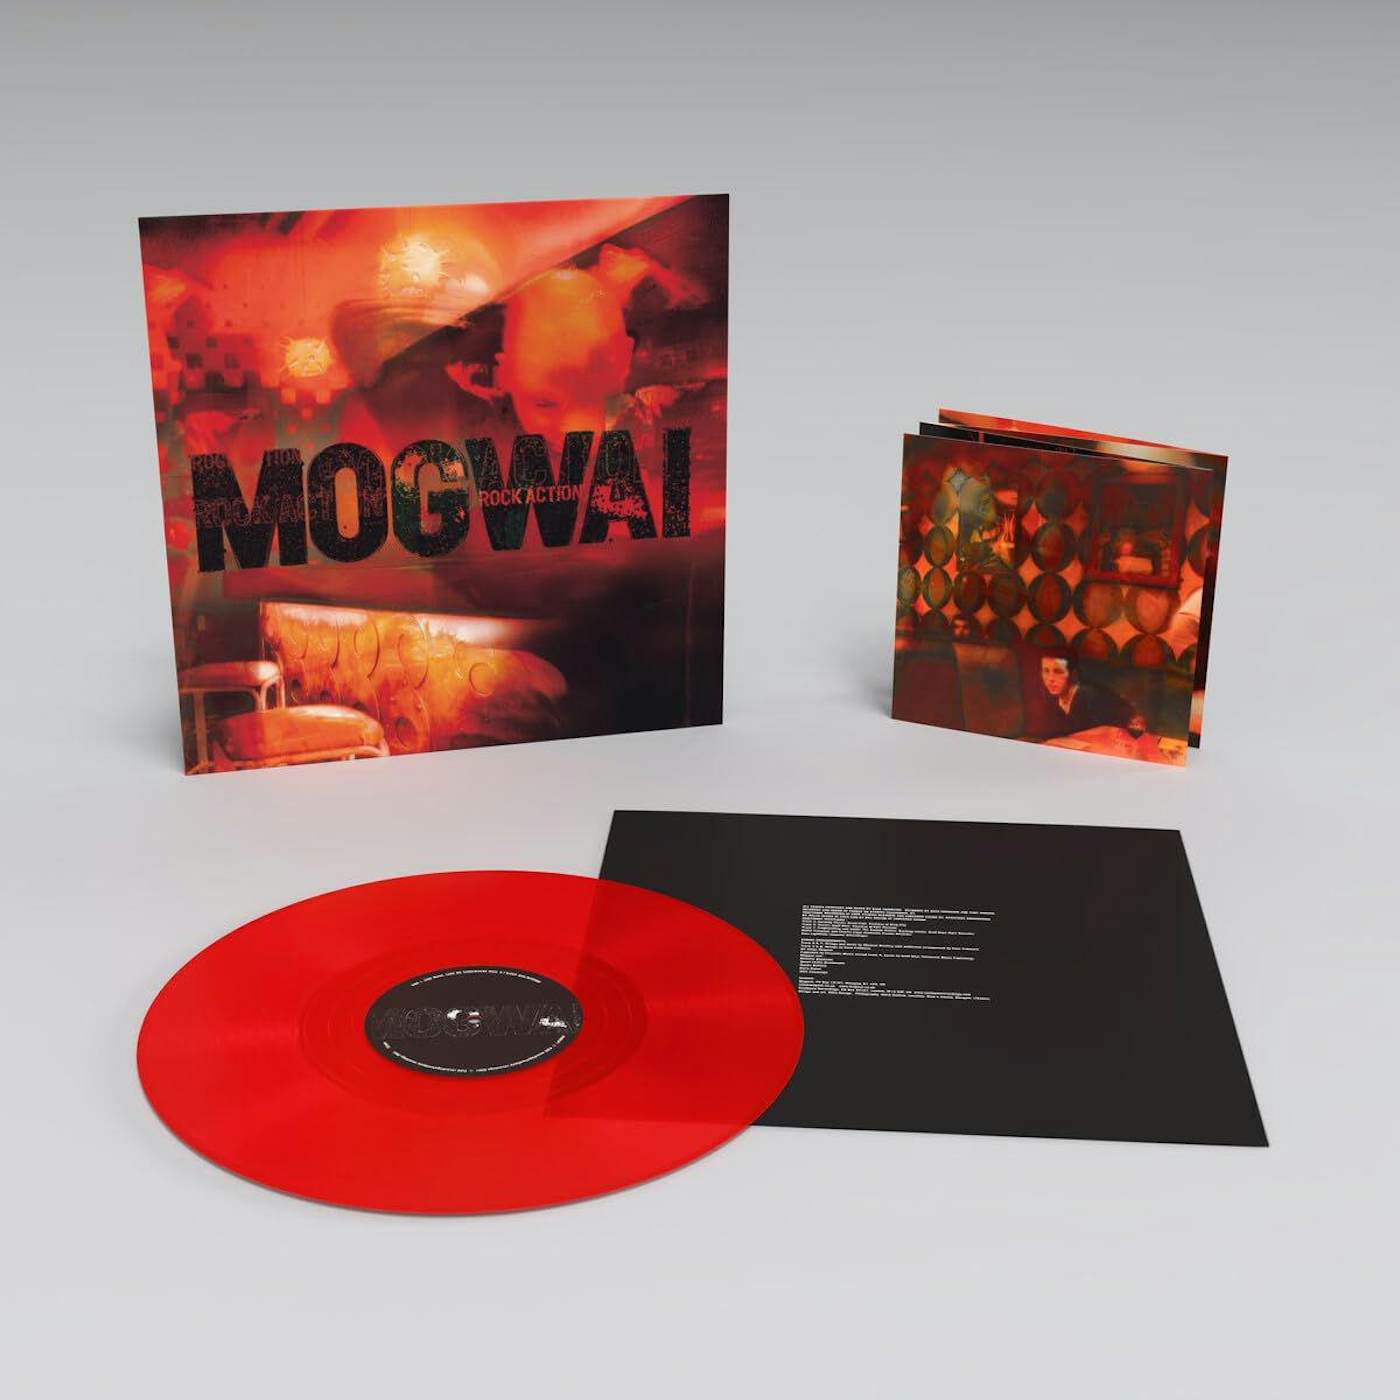 Mogwai - Rock Action [LP] (Red Vinyl)